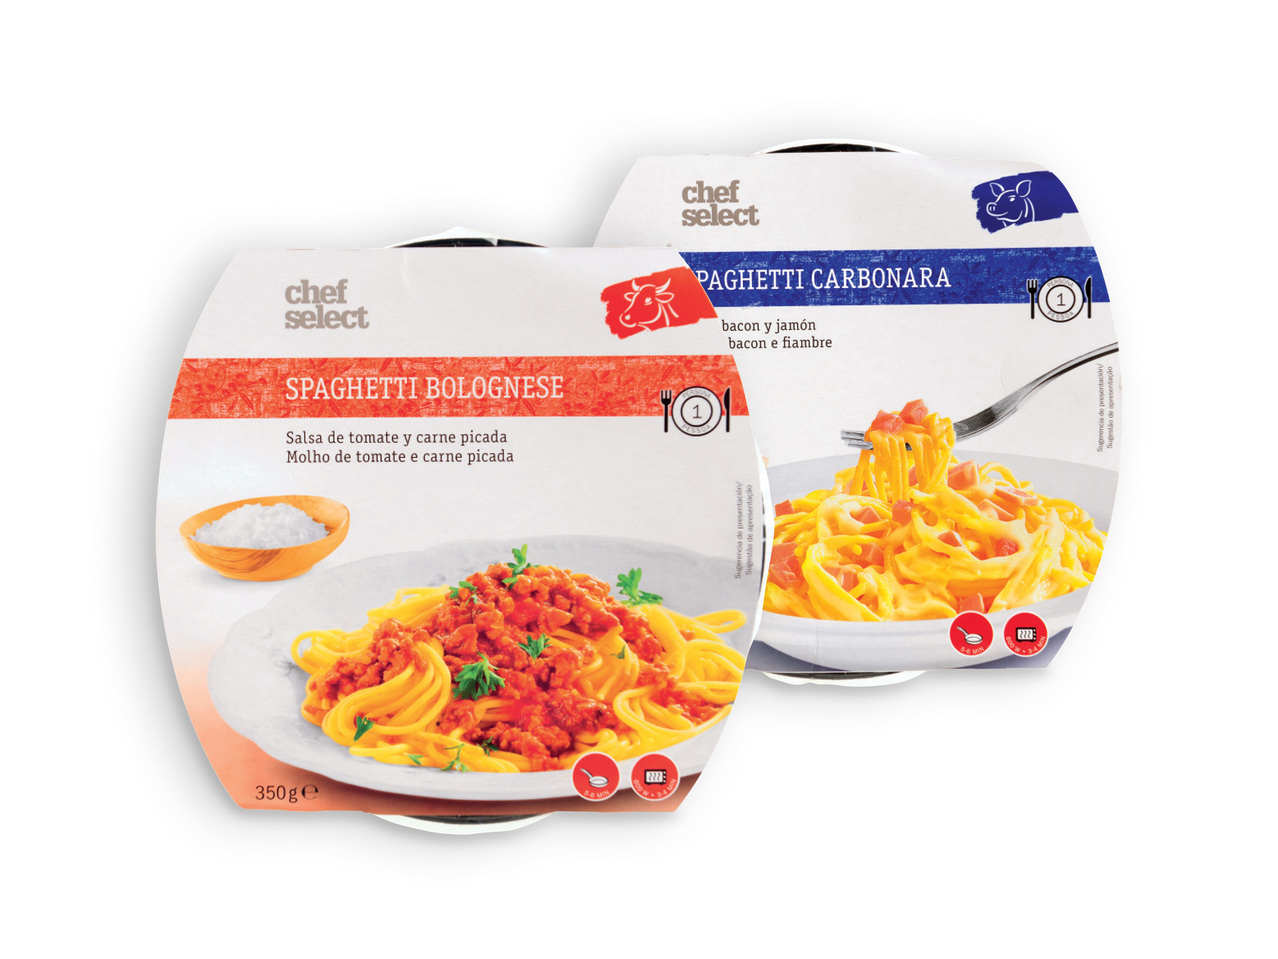 CHEF SELECT(R) Spaghetti Bolonhesa / Carbonara